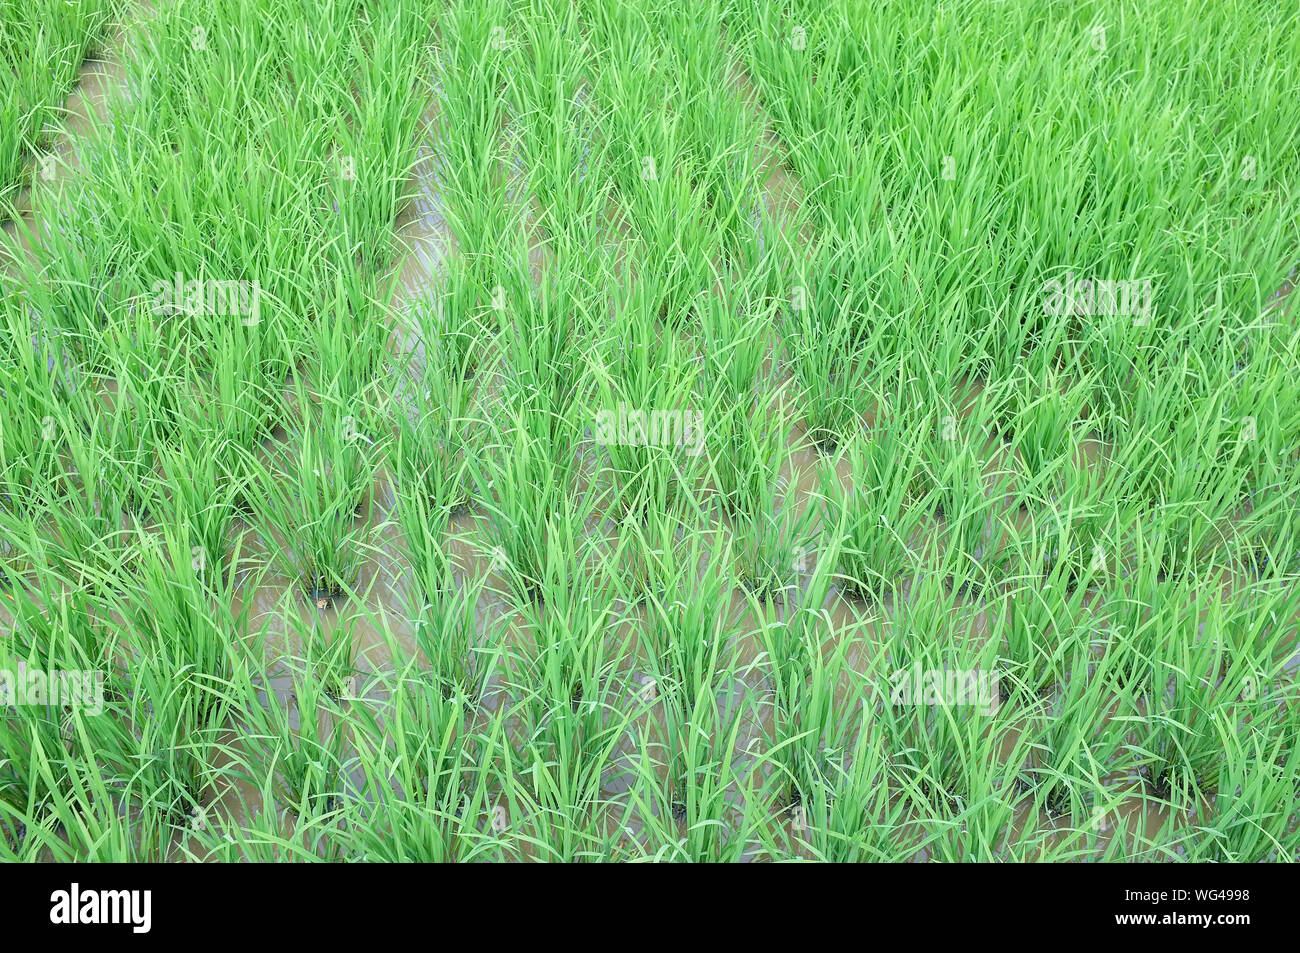 Rice paddy or paddy field in Osaka, Japan. Stock Photo